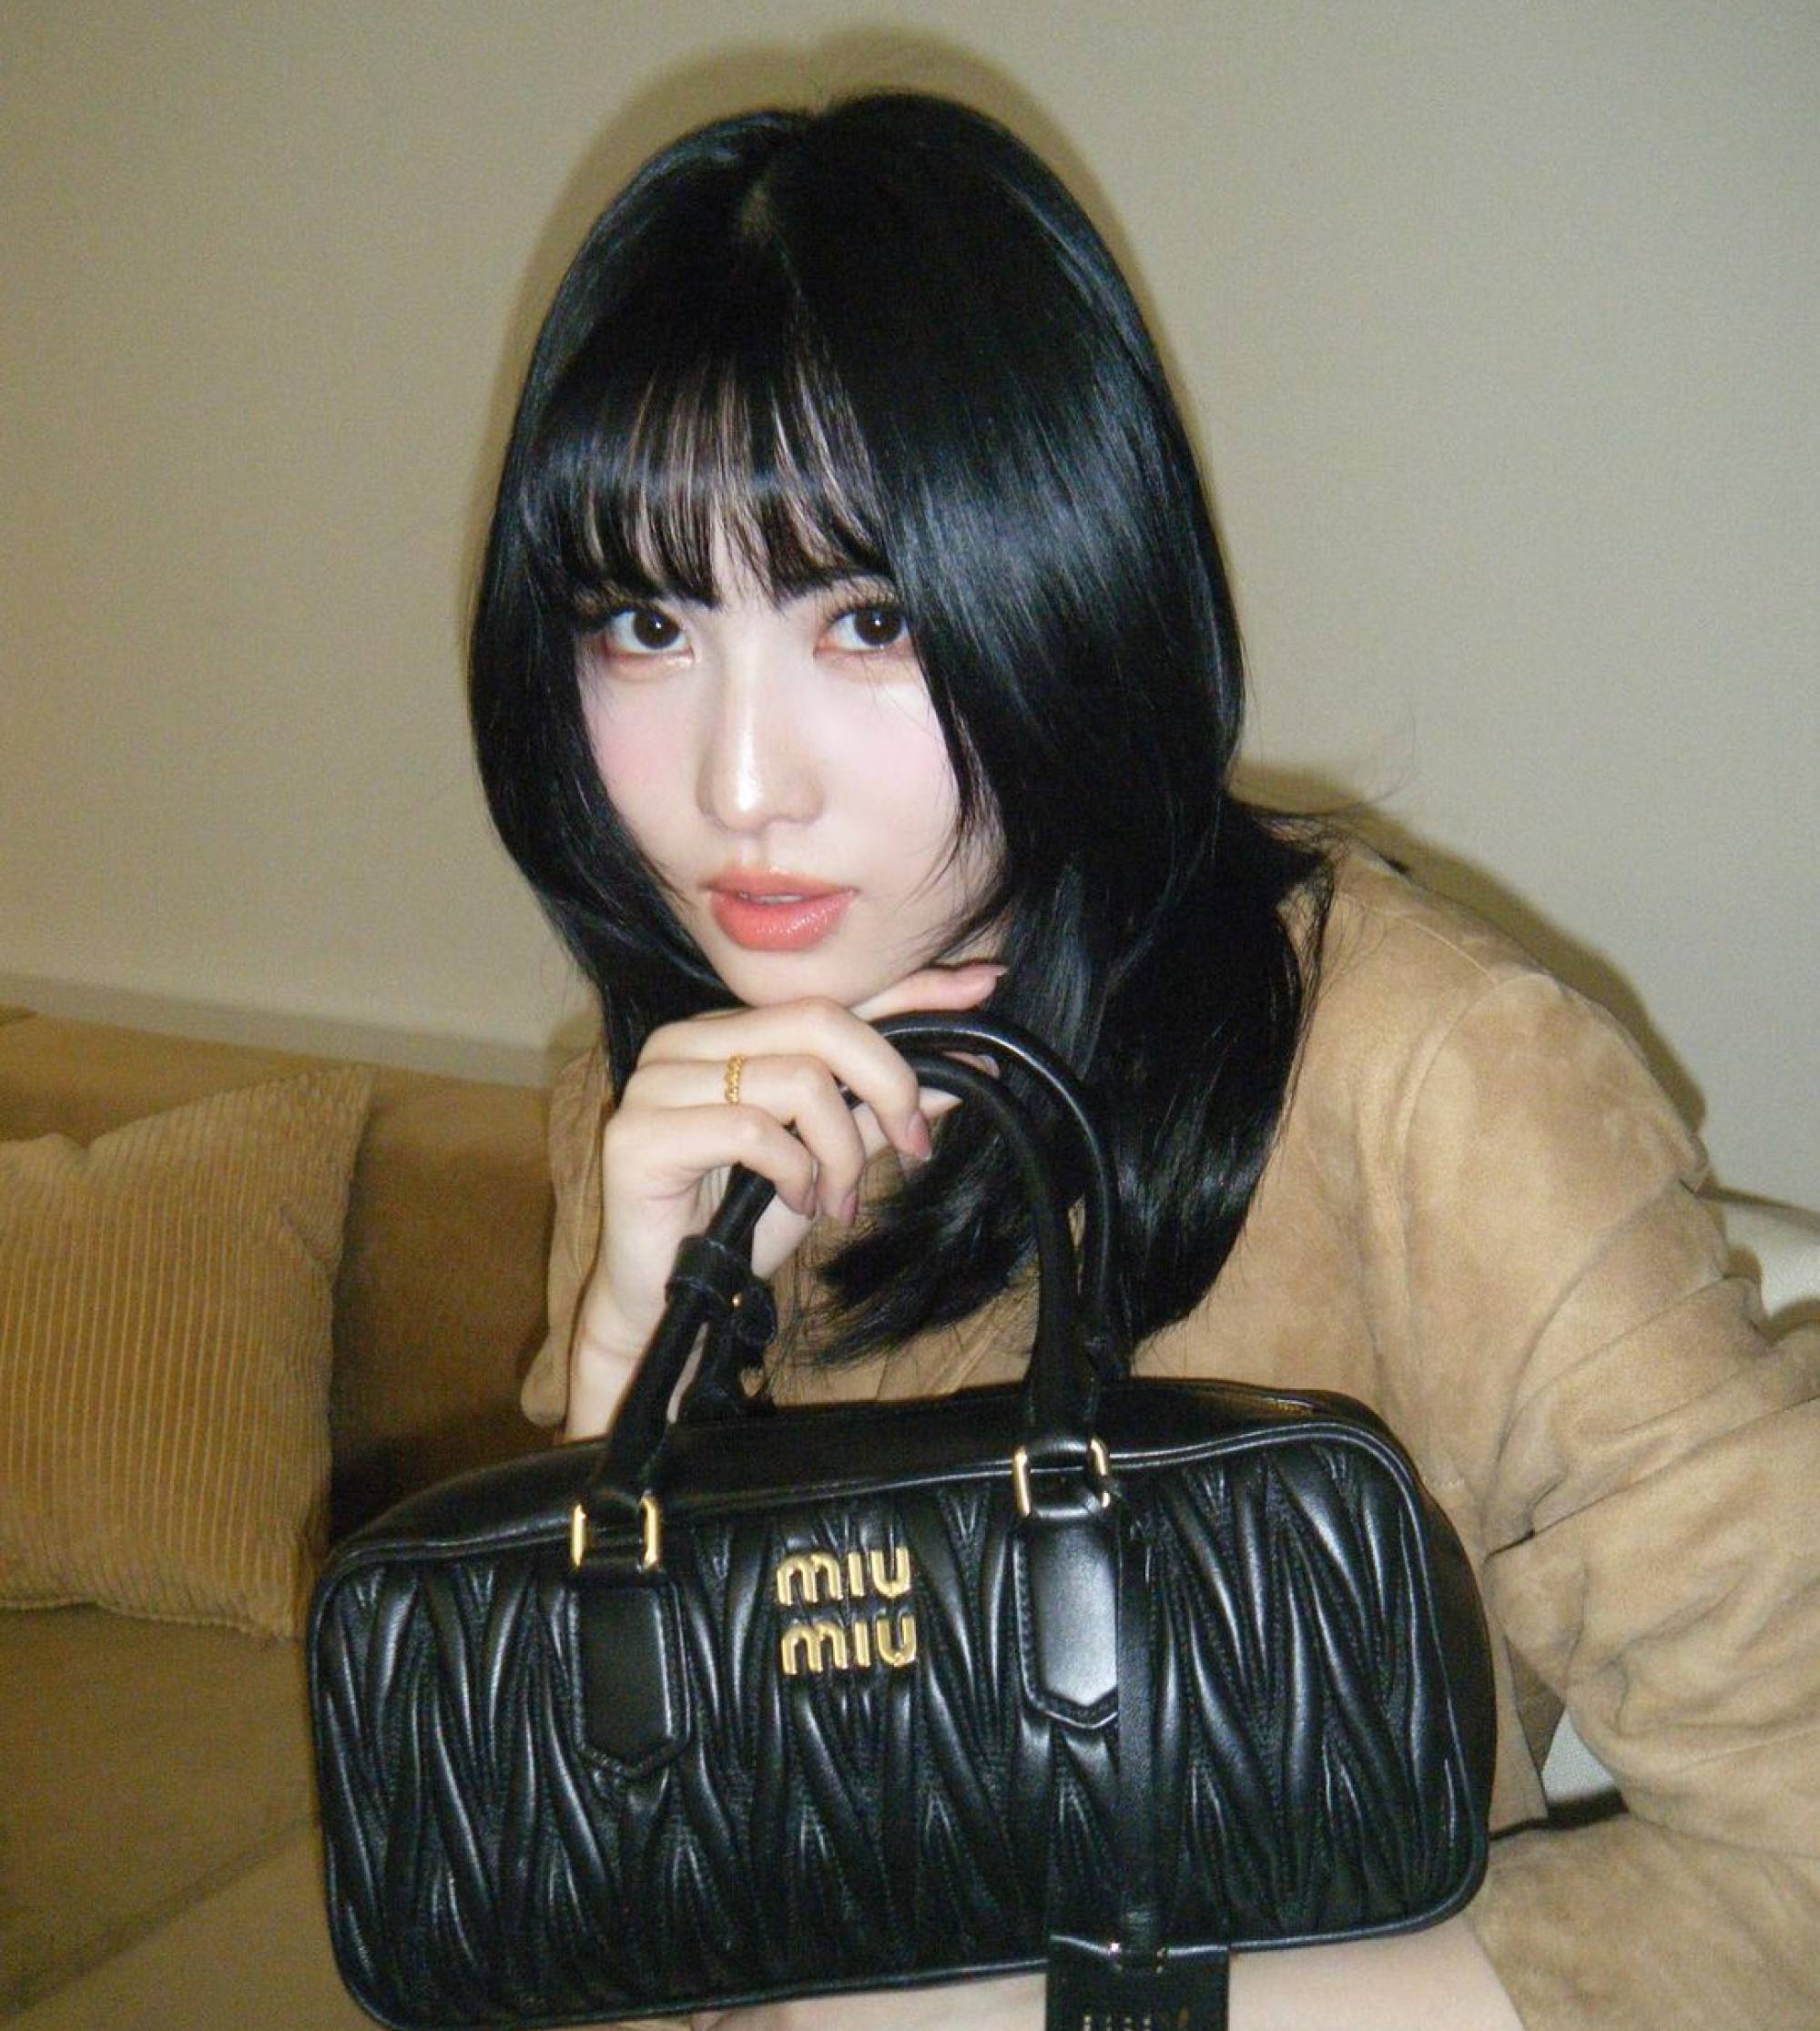 Hong Kong Cantopop star Kayan9896's luxury bag obsession: singer